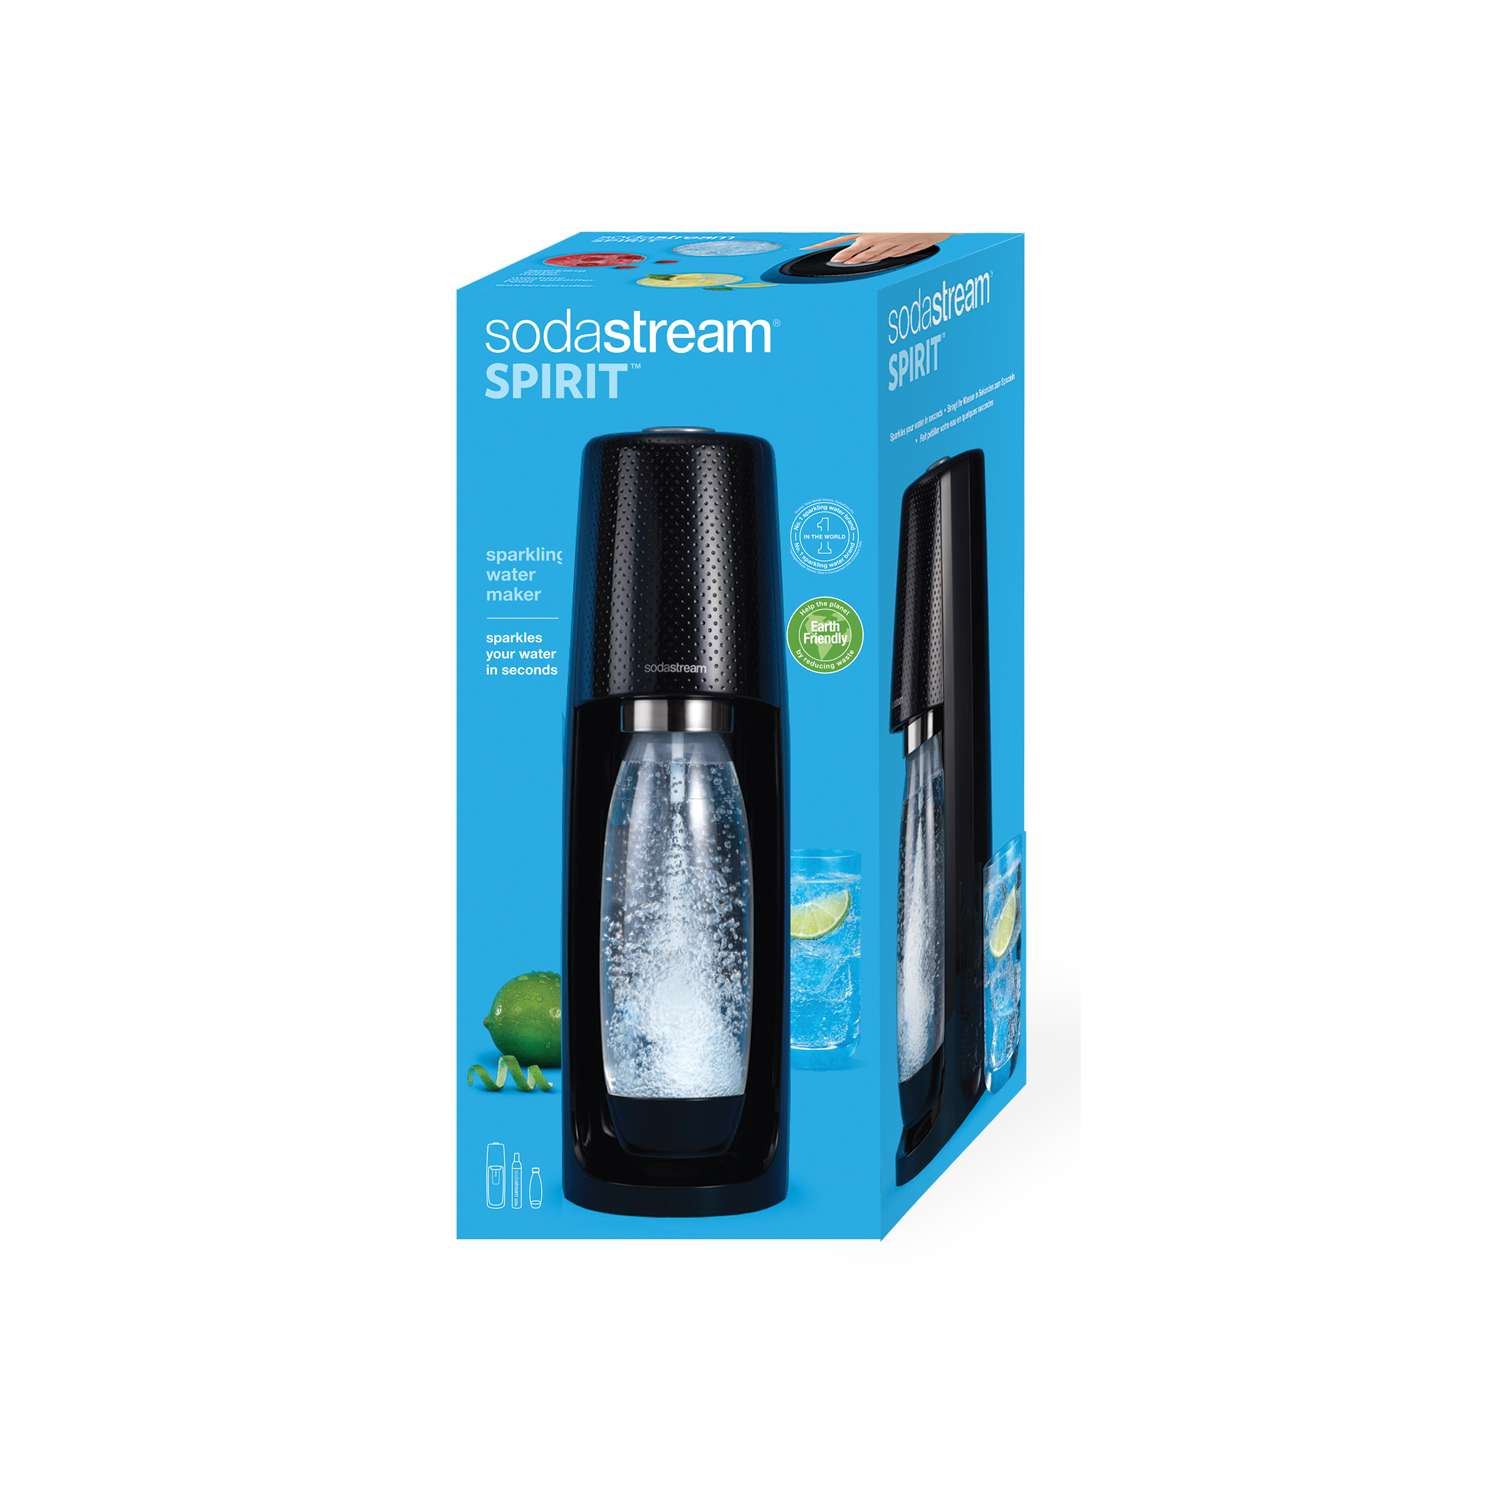 SodaStream Spirit Mega Pack Sparkling Water/Soda Maker Black 60L 1EACH